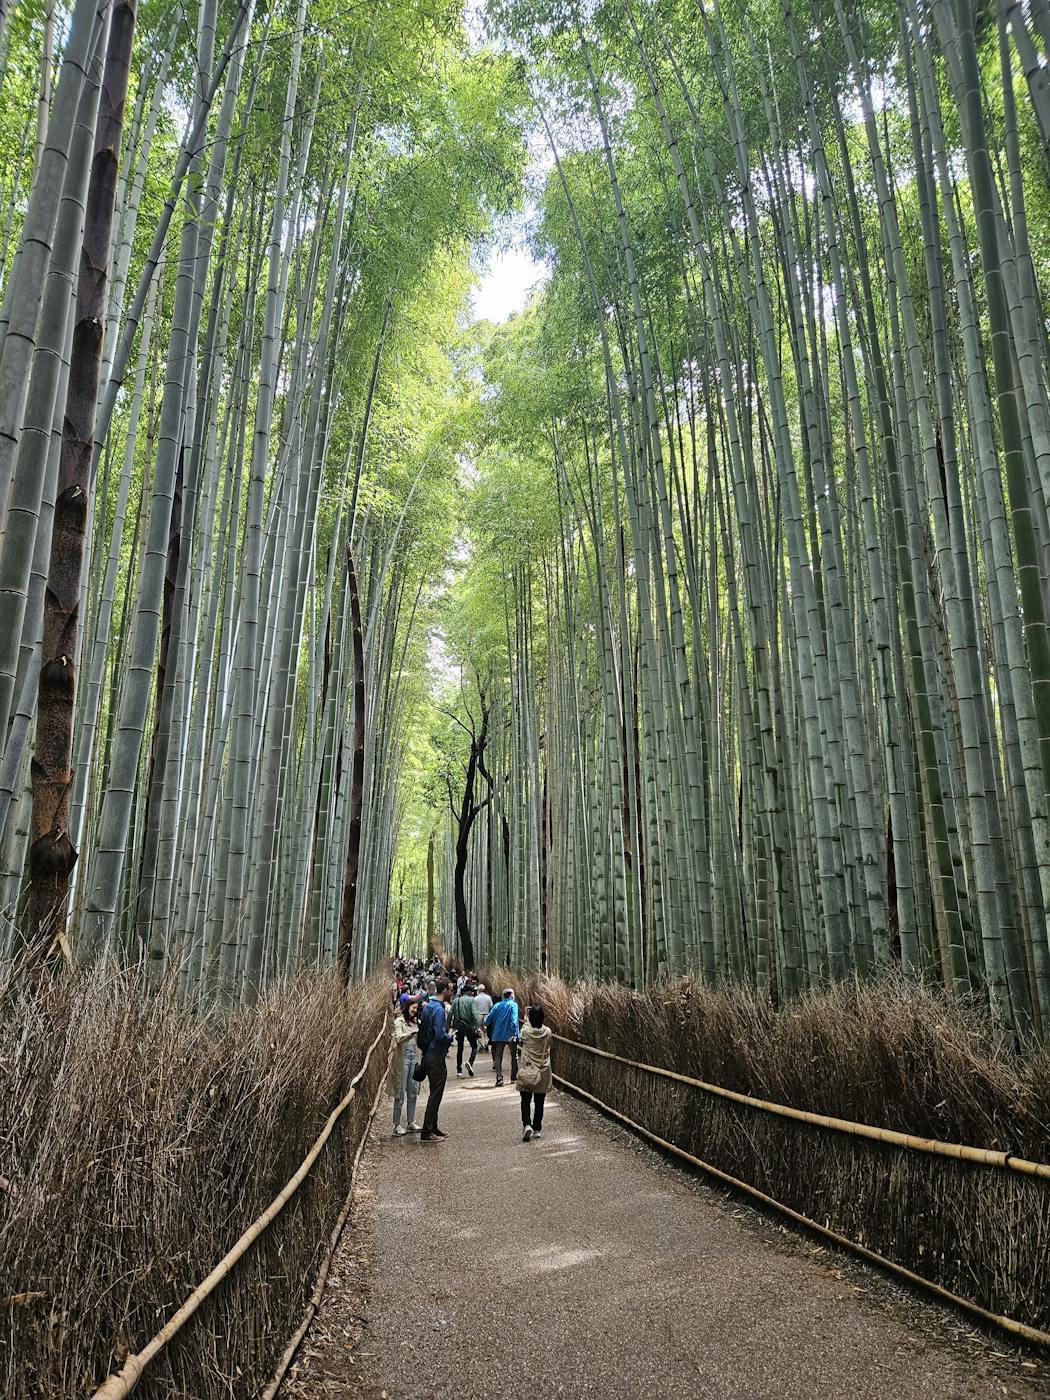 Arashiyama Bamboo Grove was one of the many serene highlights of Kyoto.